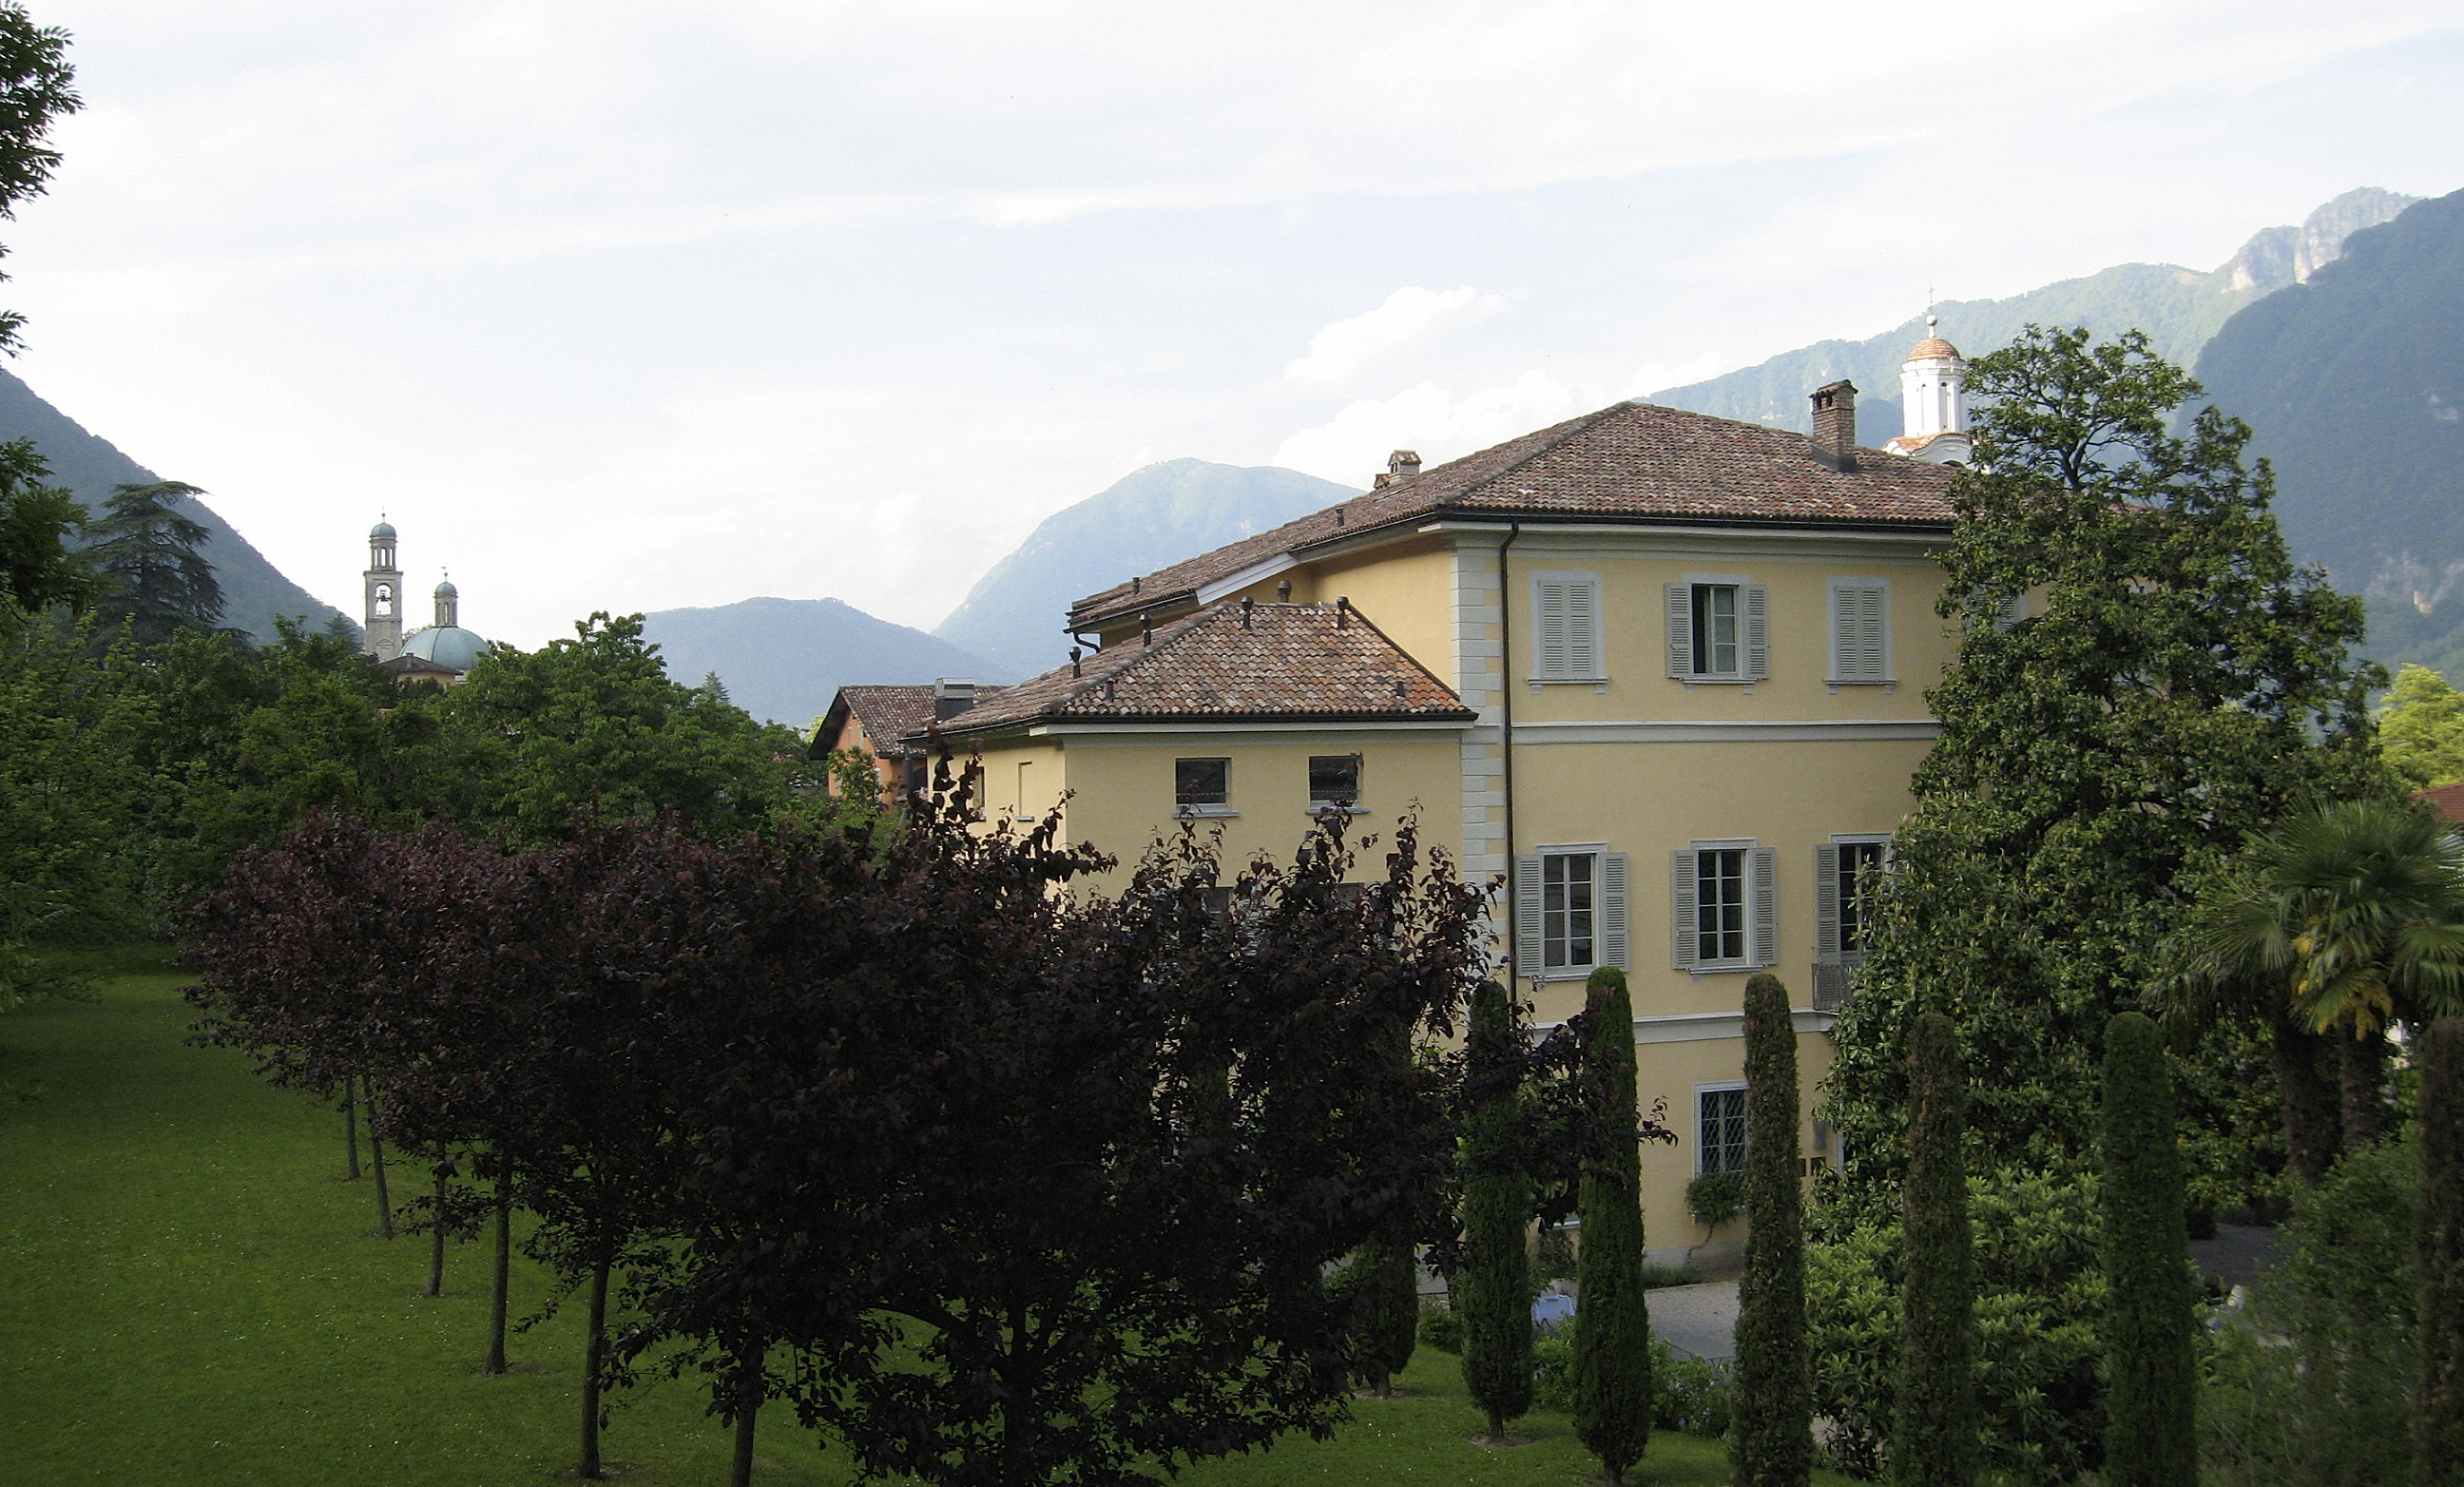 Casa Maderni, Center for European Studies and Architecture, in Riva San Vitale, Switzerland